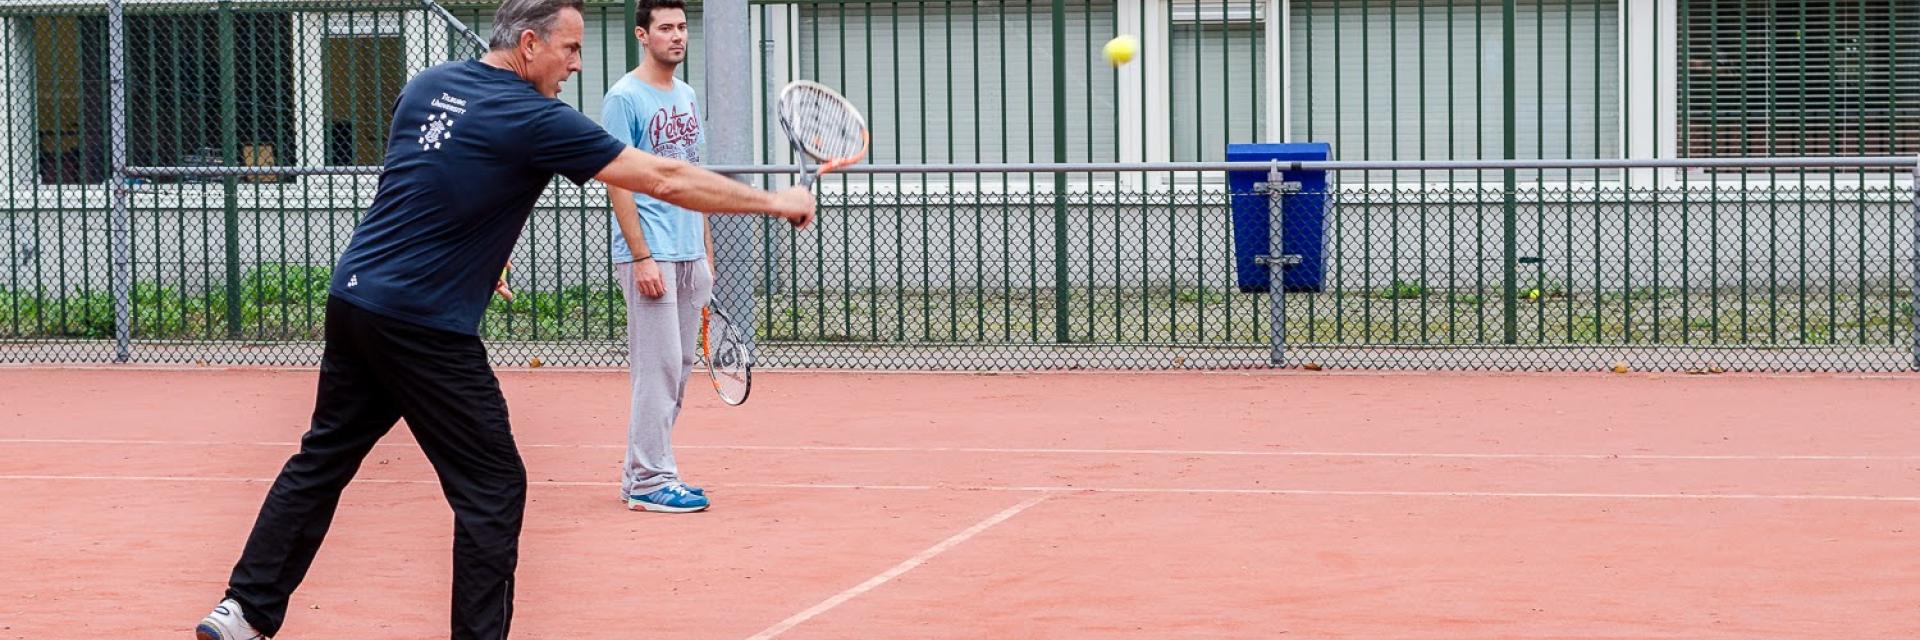 Sports Center - Tennis